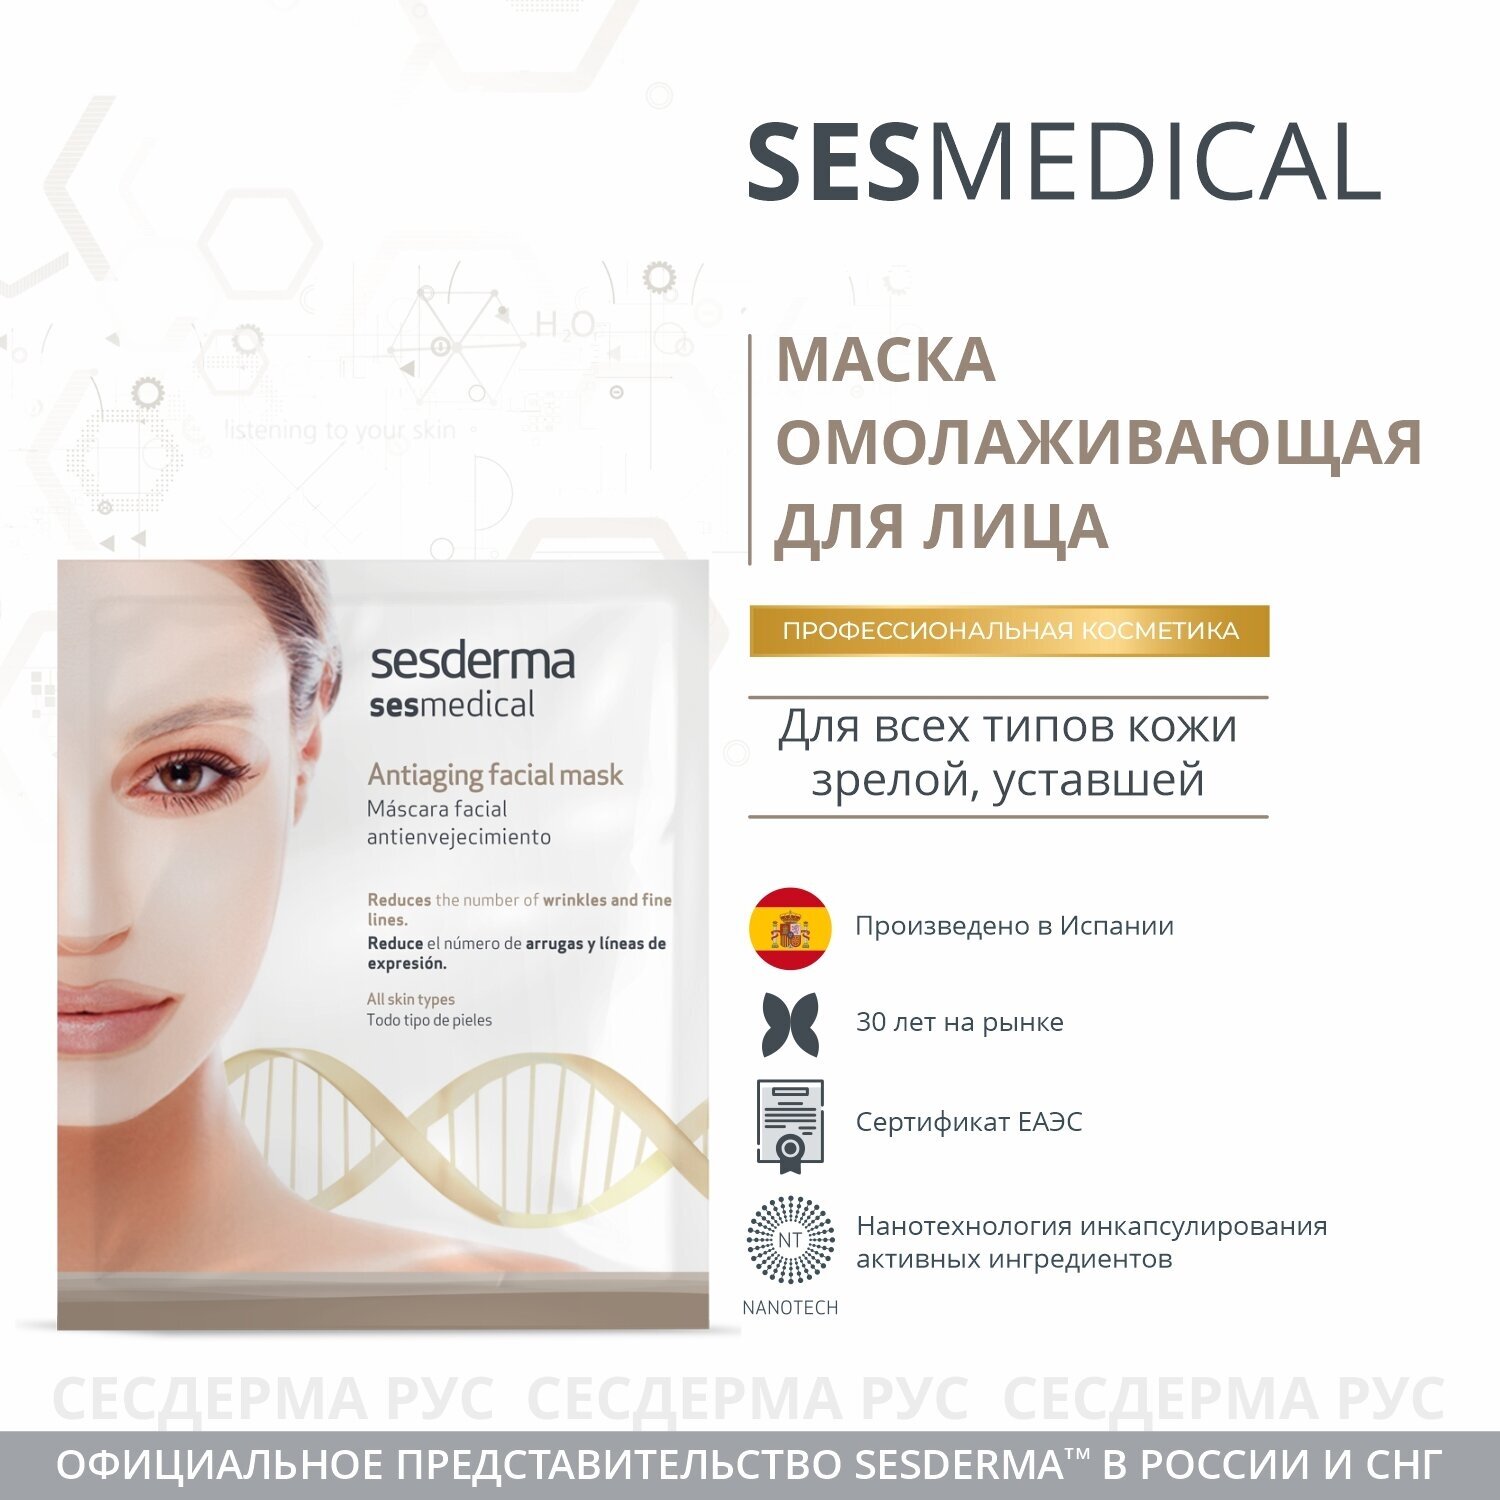 SesDerma Sesmedical Antiaging Facial Mask Маска для лица против морщин, 1 шт.